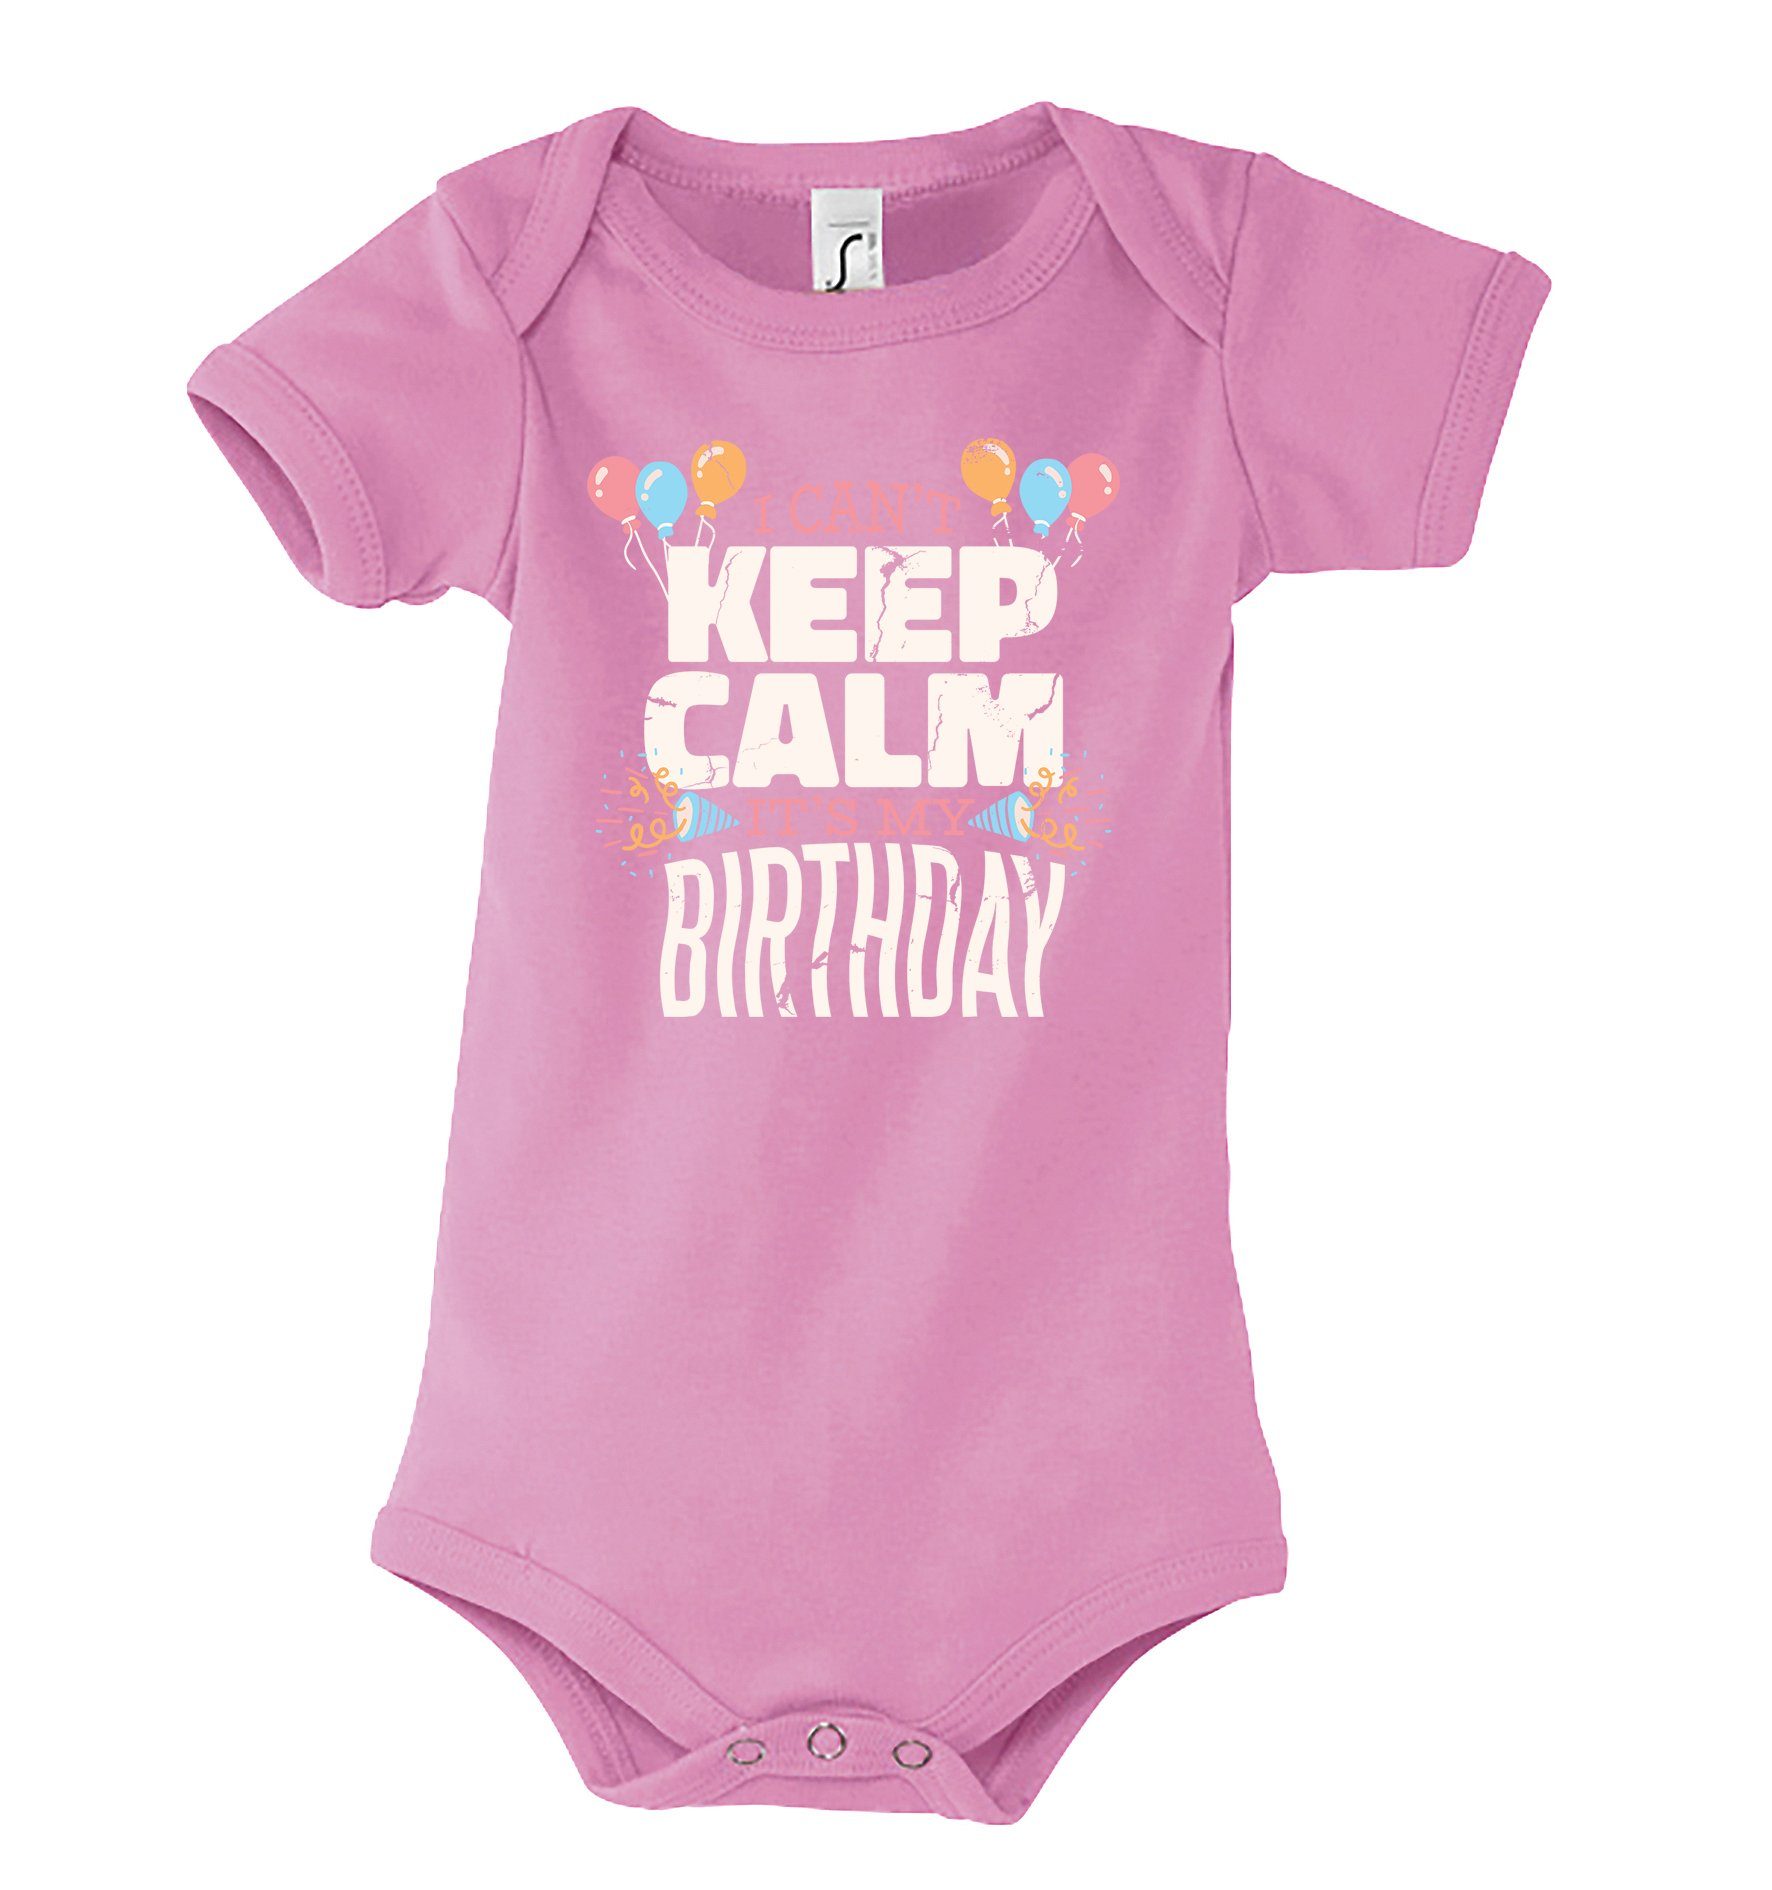 Baby mit Youth Kurzarm Strampler Designz It´s Rosa Birthday" Body Calm, My lustigem Frontprint Strampler "Keep